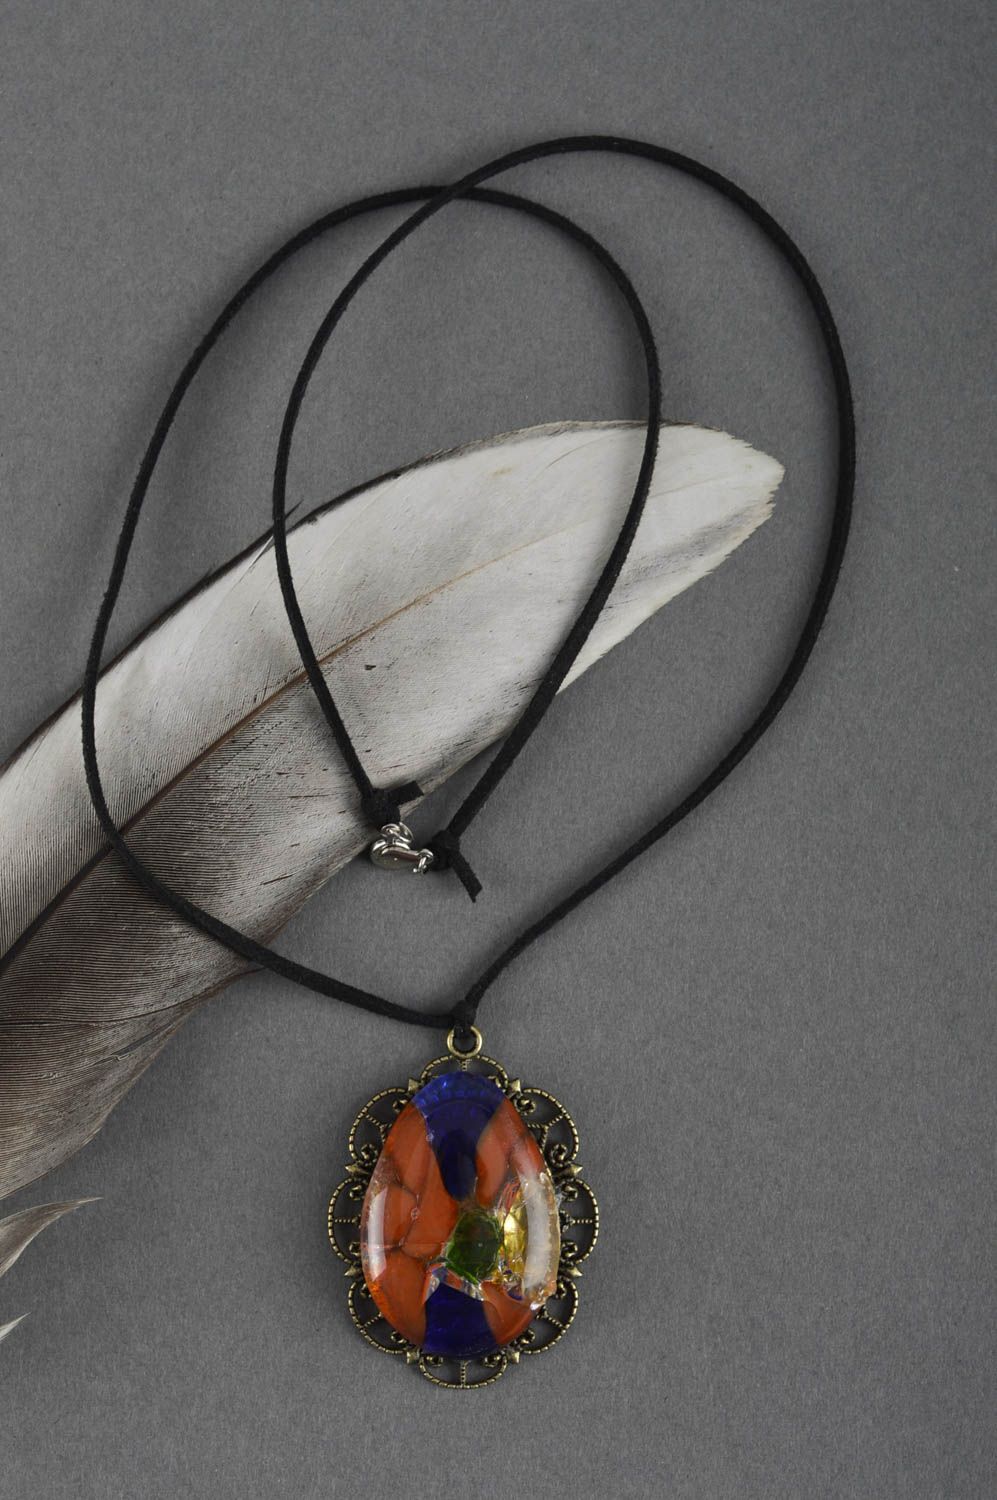 Handmade designer glass pendant unusual colorful jewelry cute accessory on lace photo 1